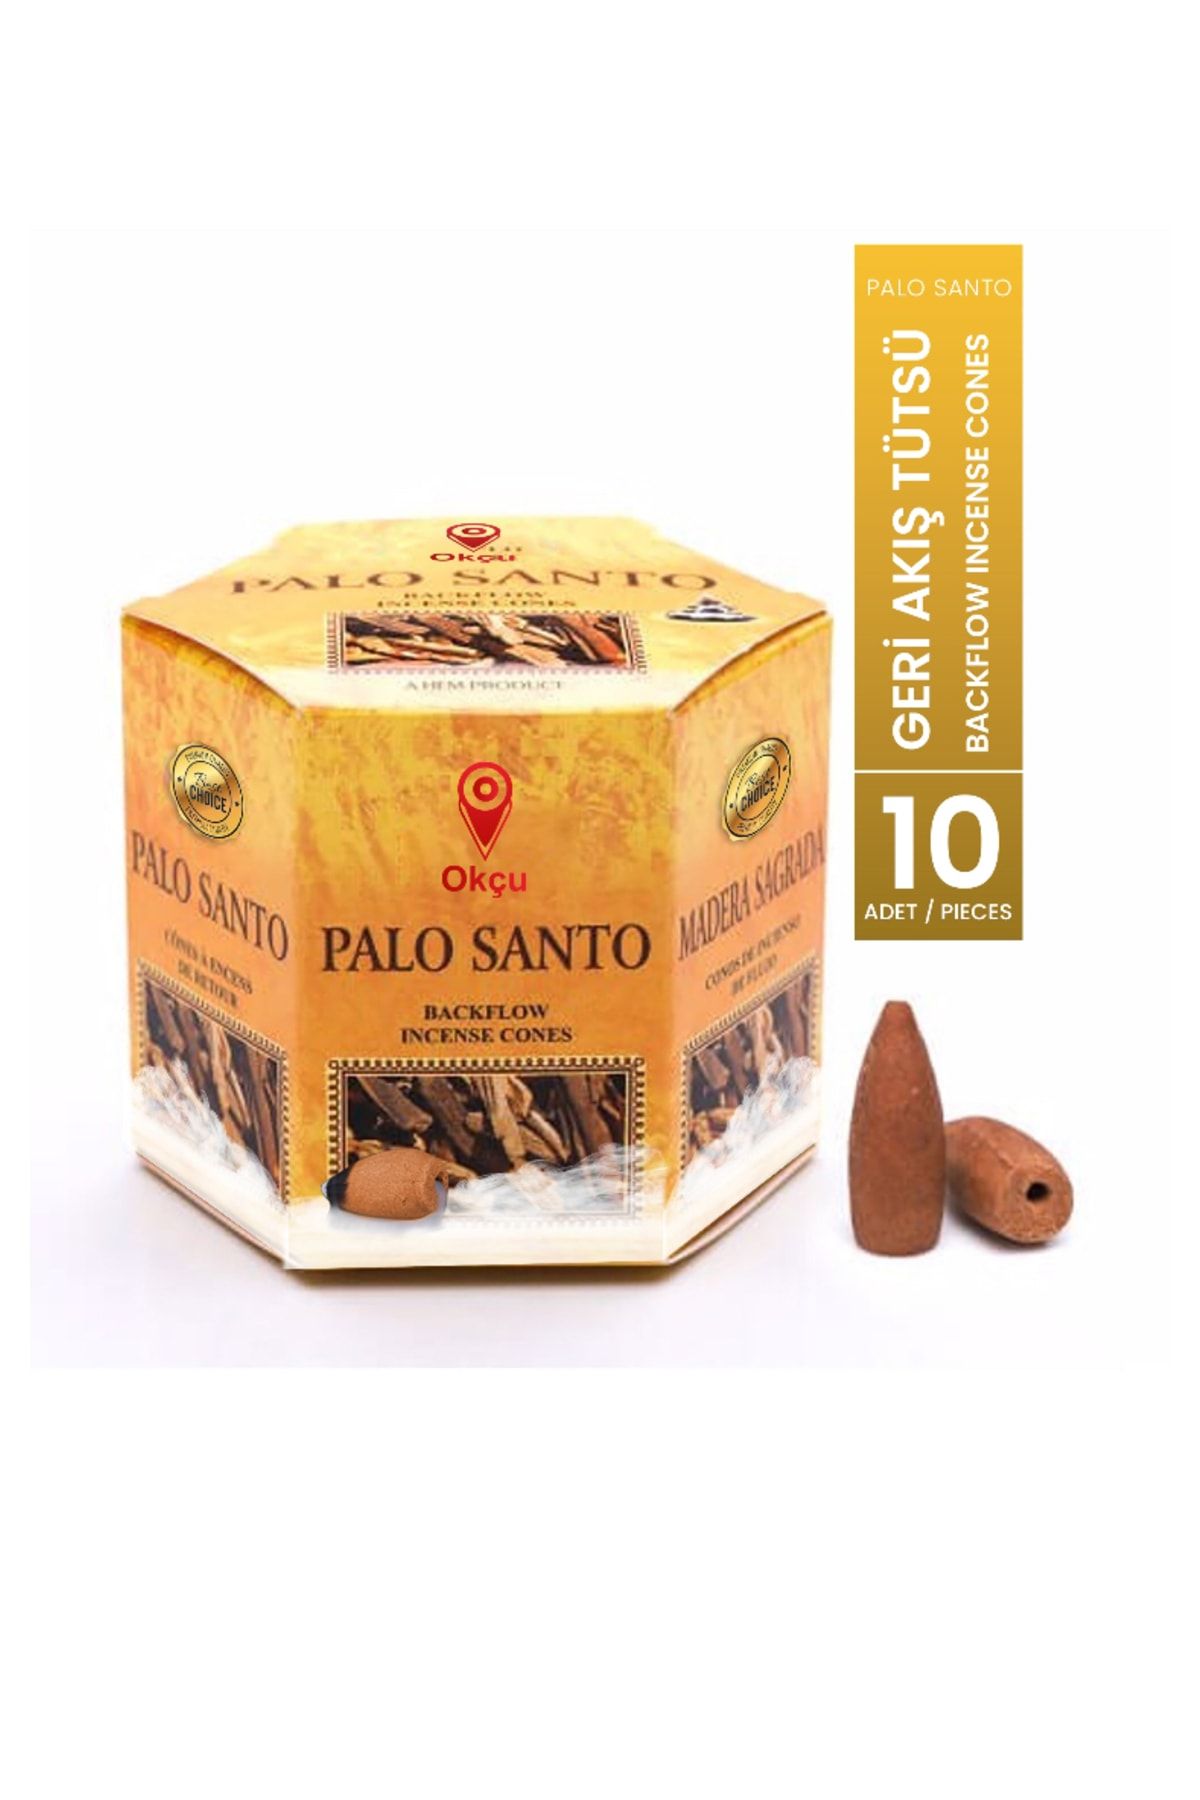 Okçu Palo Santo Geri Akış Tütsü Şelale Konik Backflow Incense Cones 10 Adet /pieces